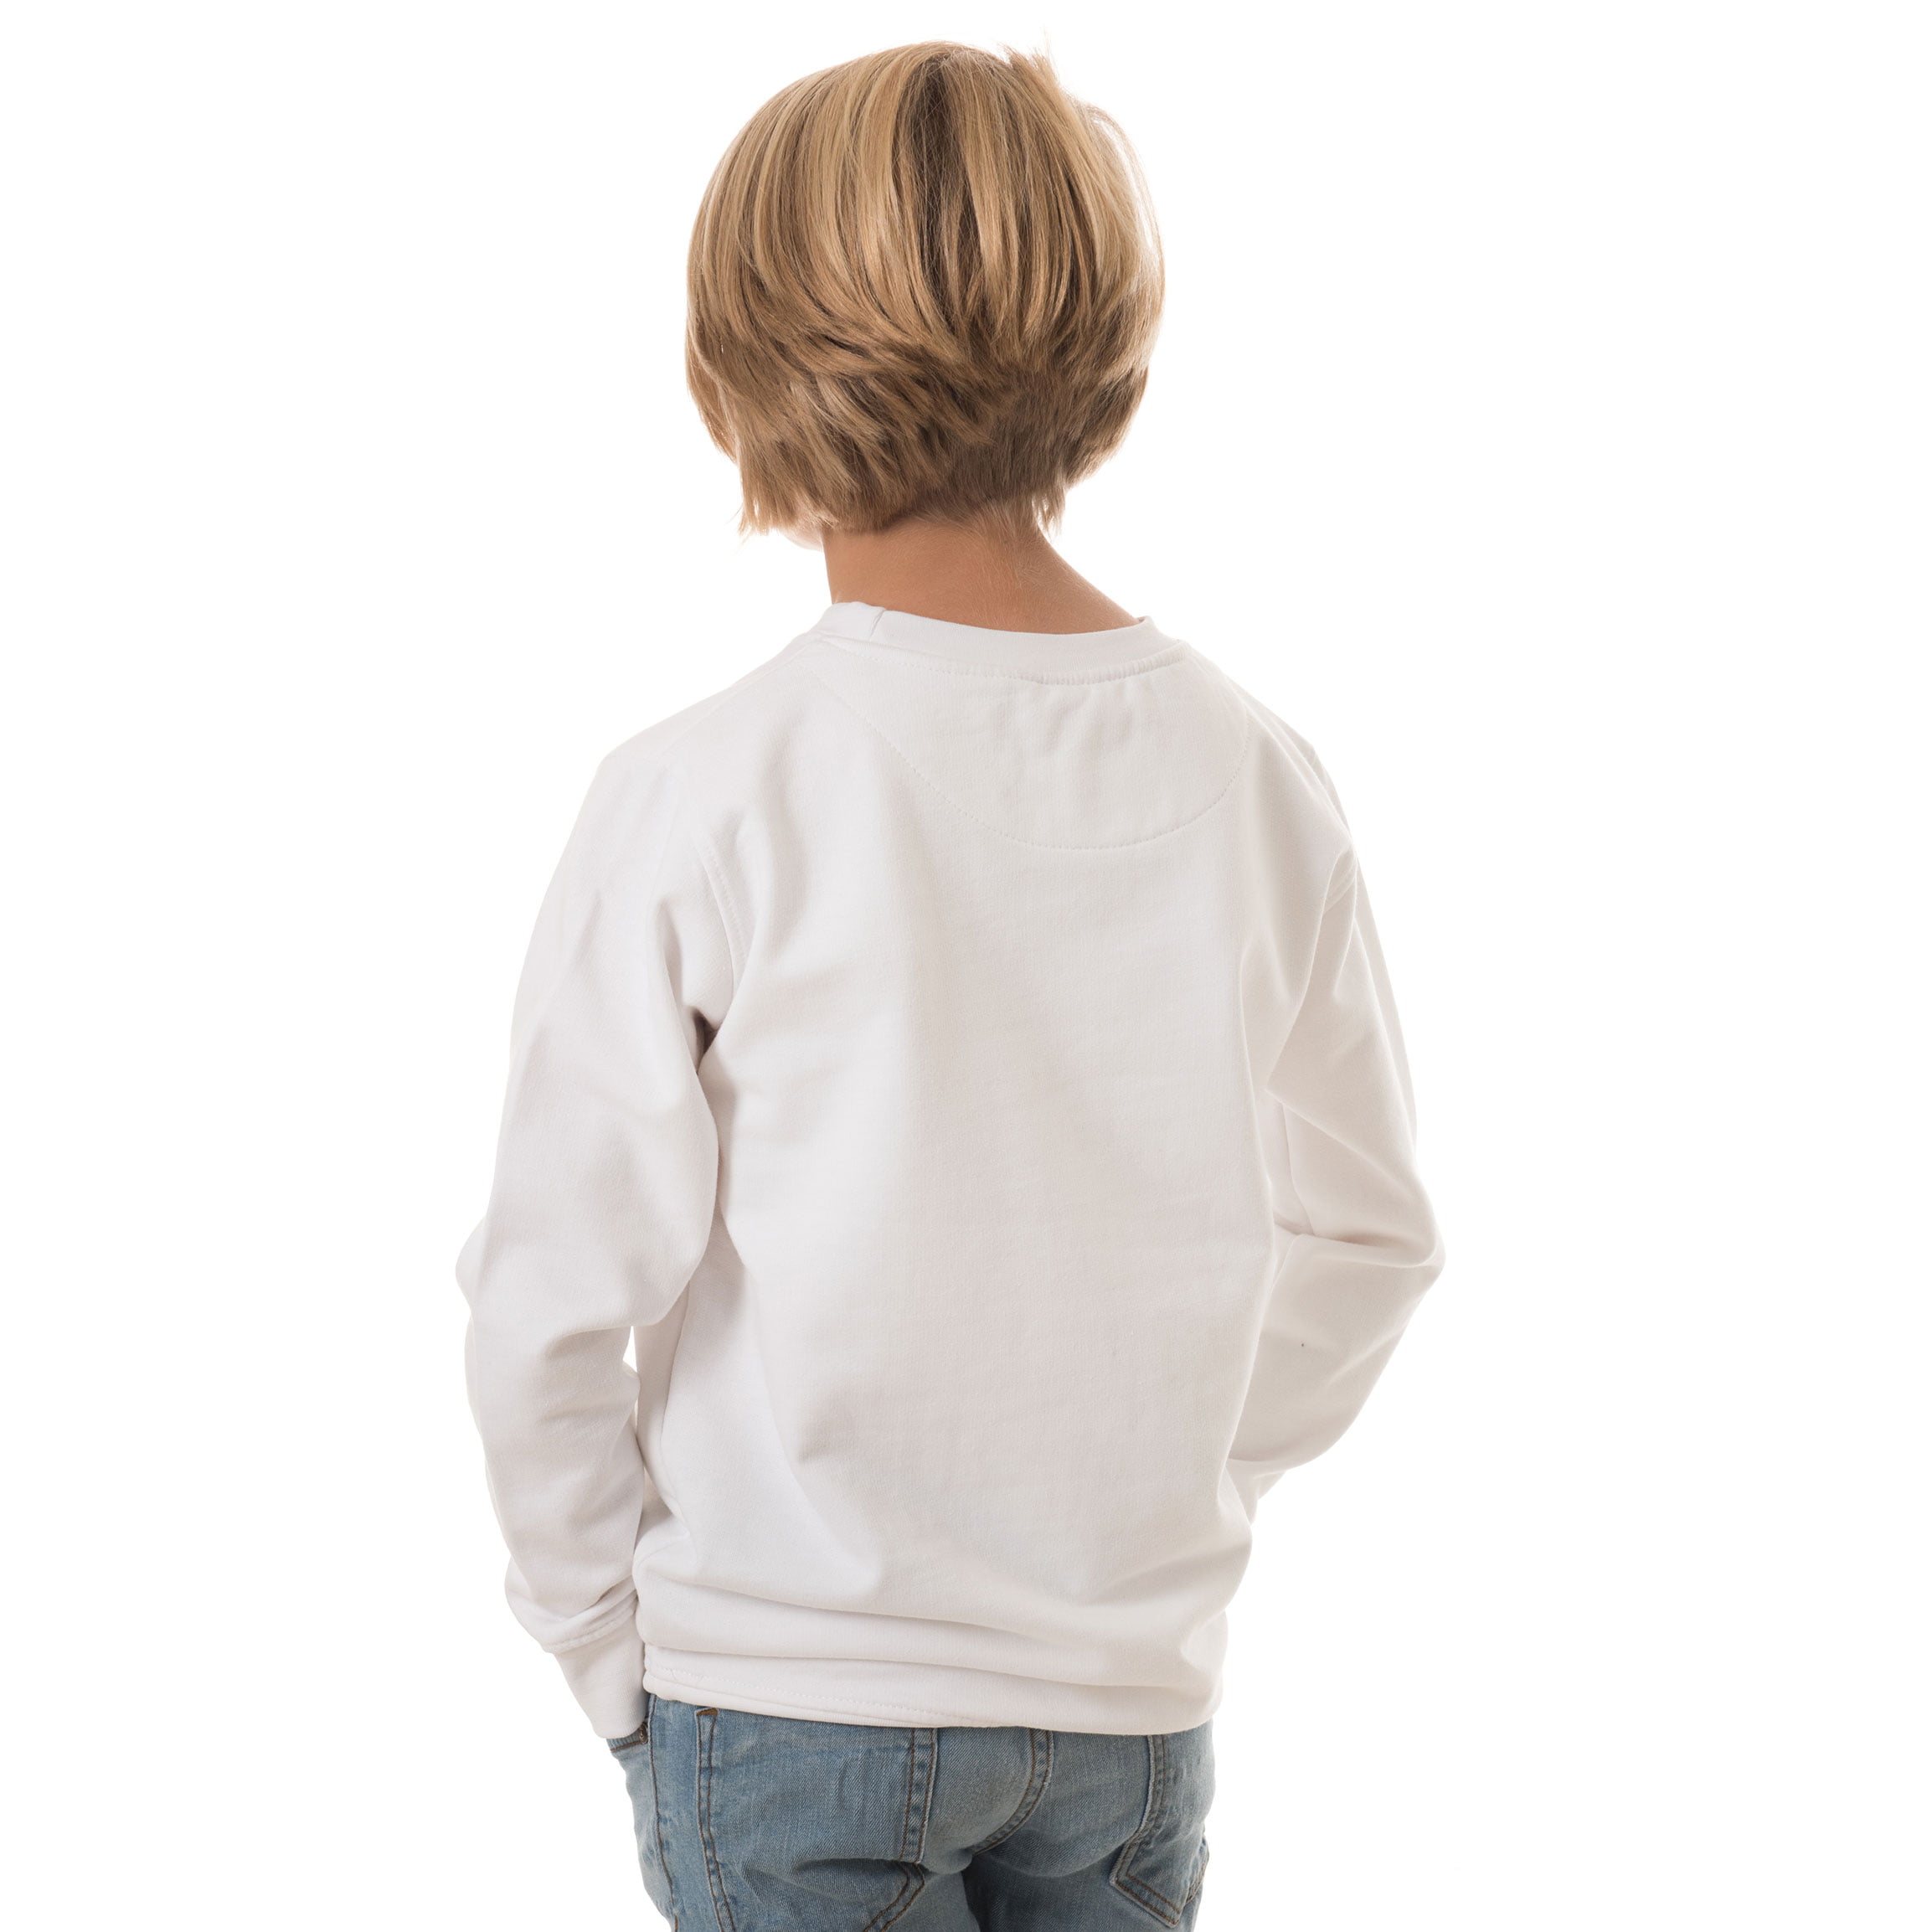 Non branded kids sweatshirt reat